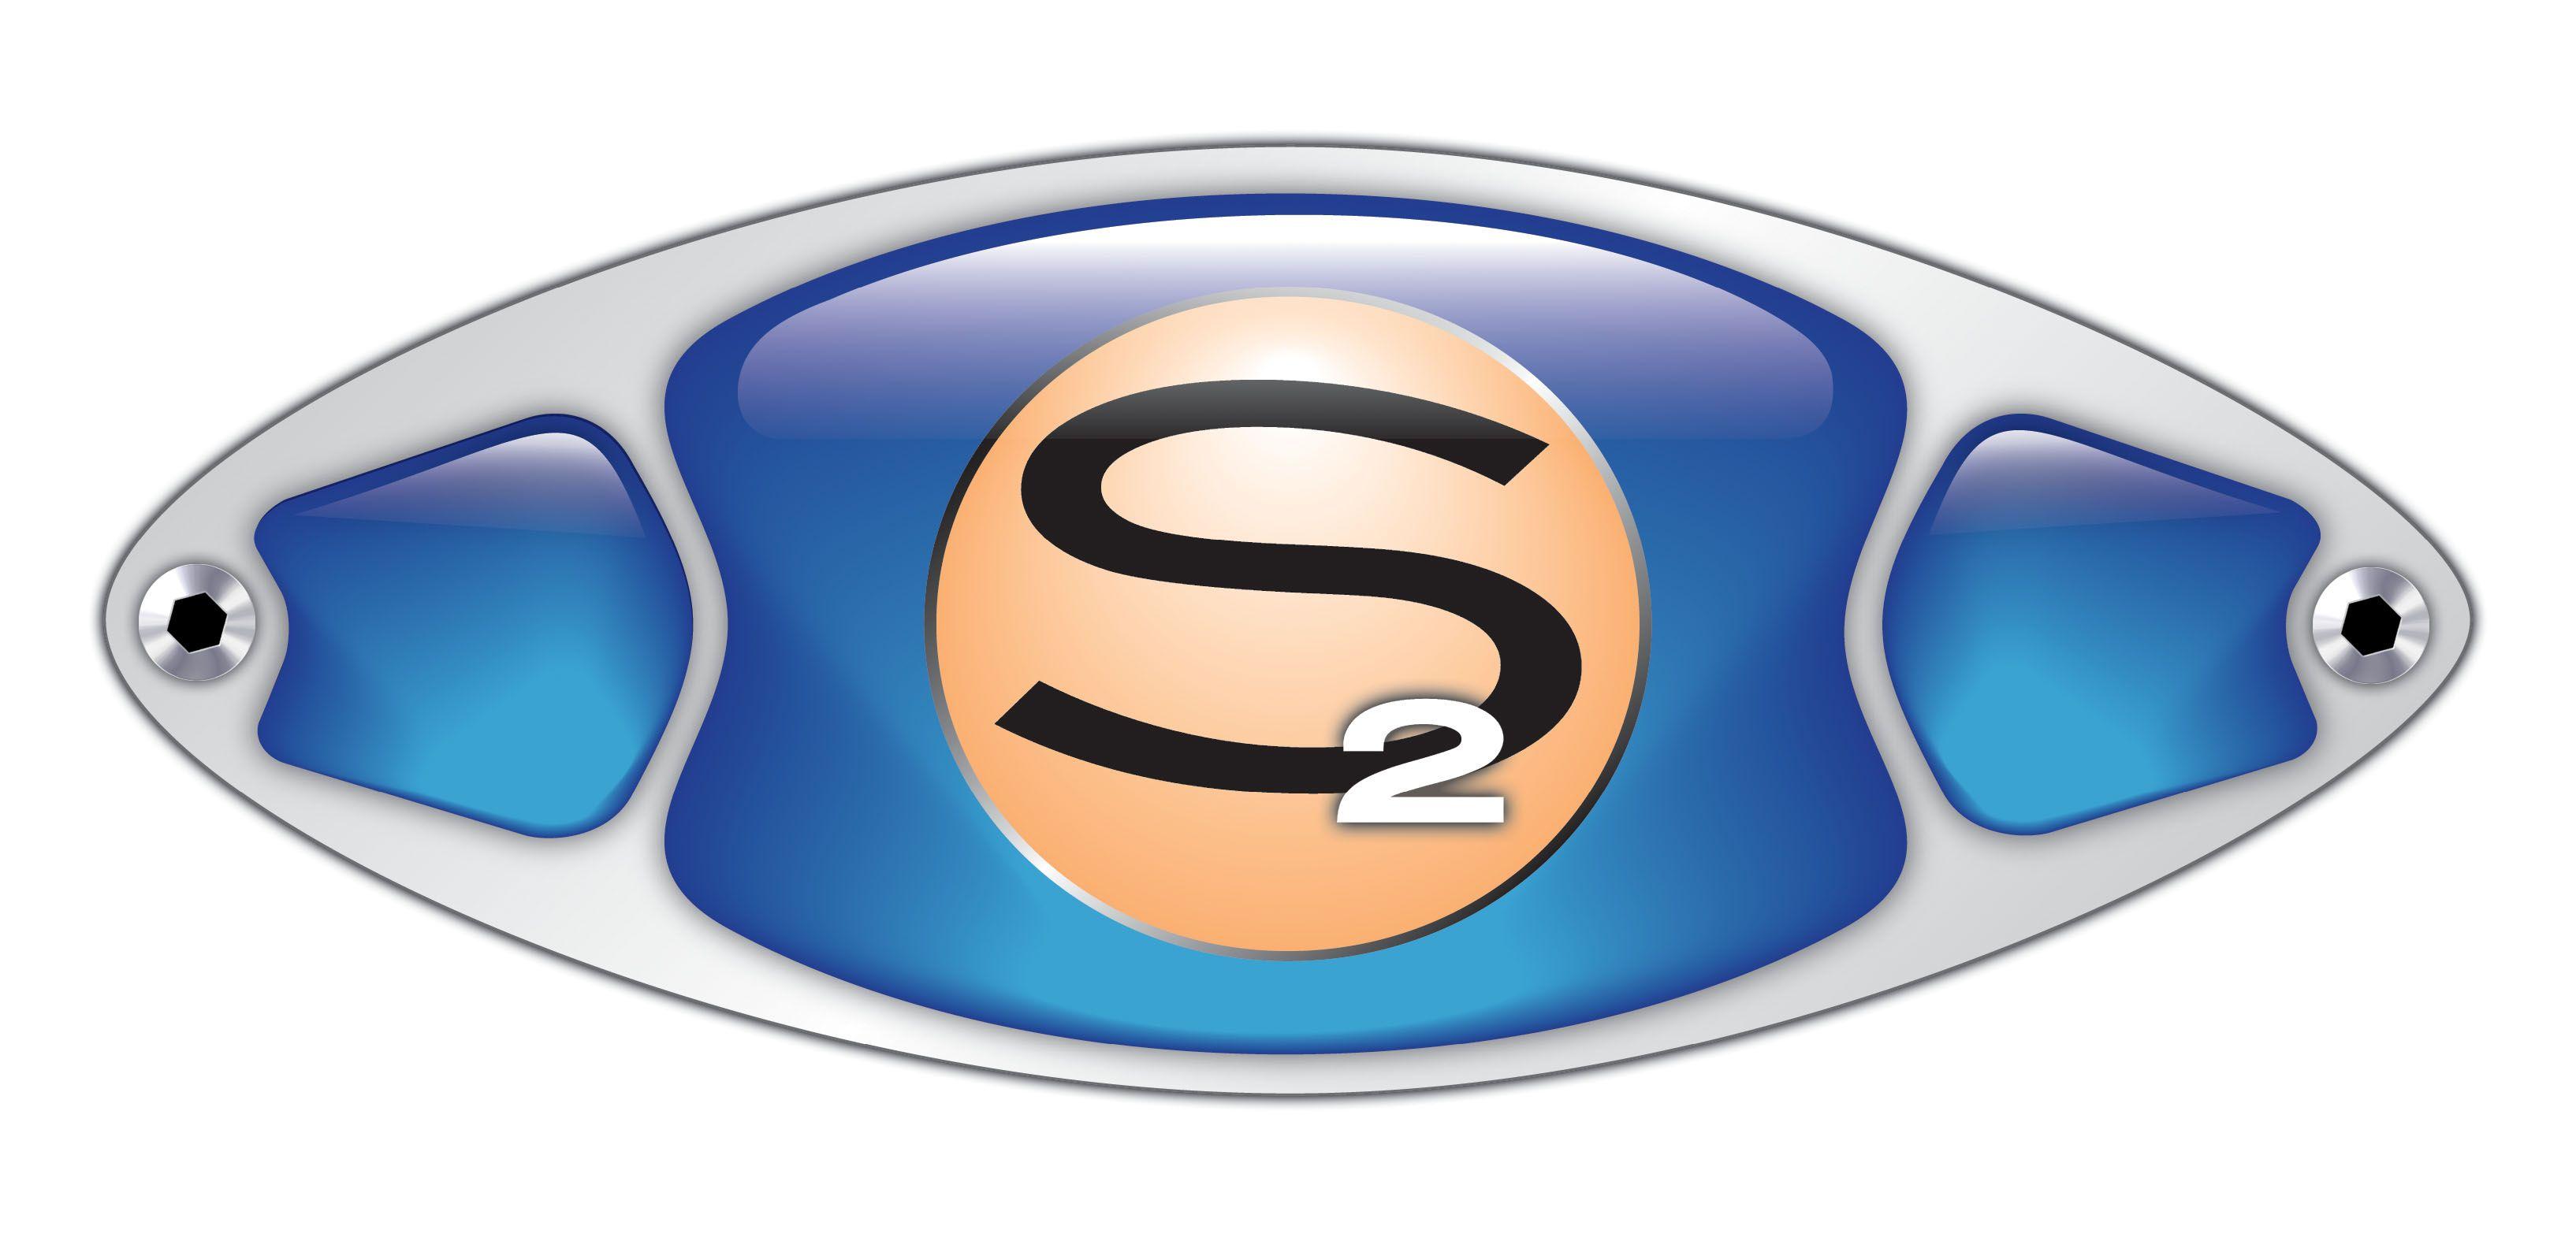 S2 Logo - Sonifex Catalogues, Handbooks, Logos & Images